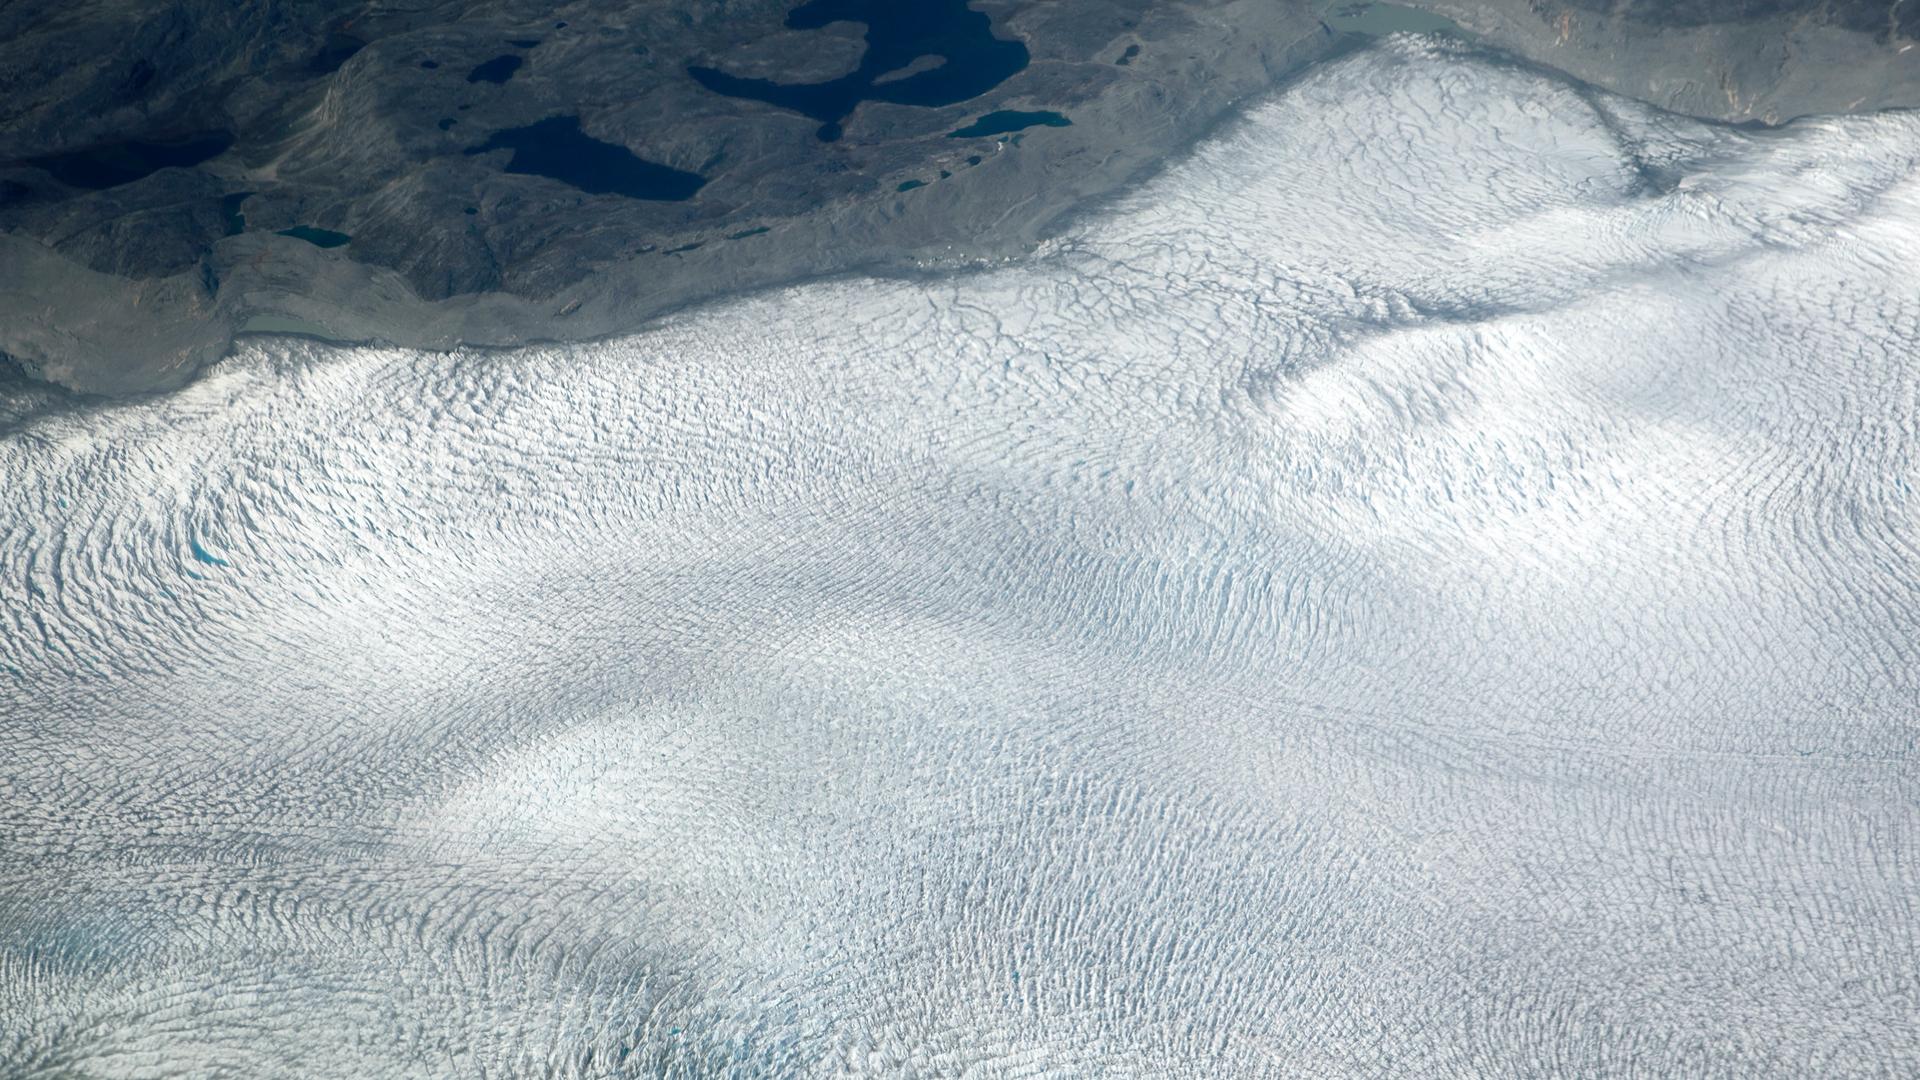 A vast, white sheet of ice